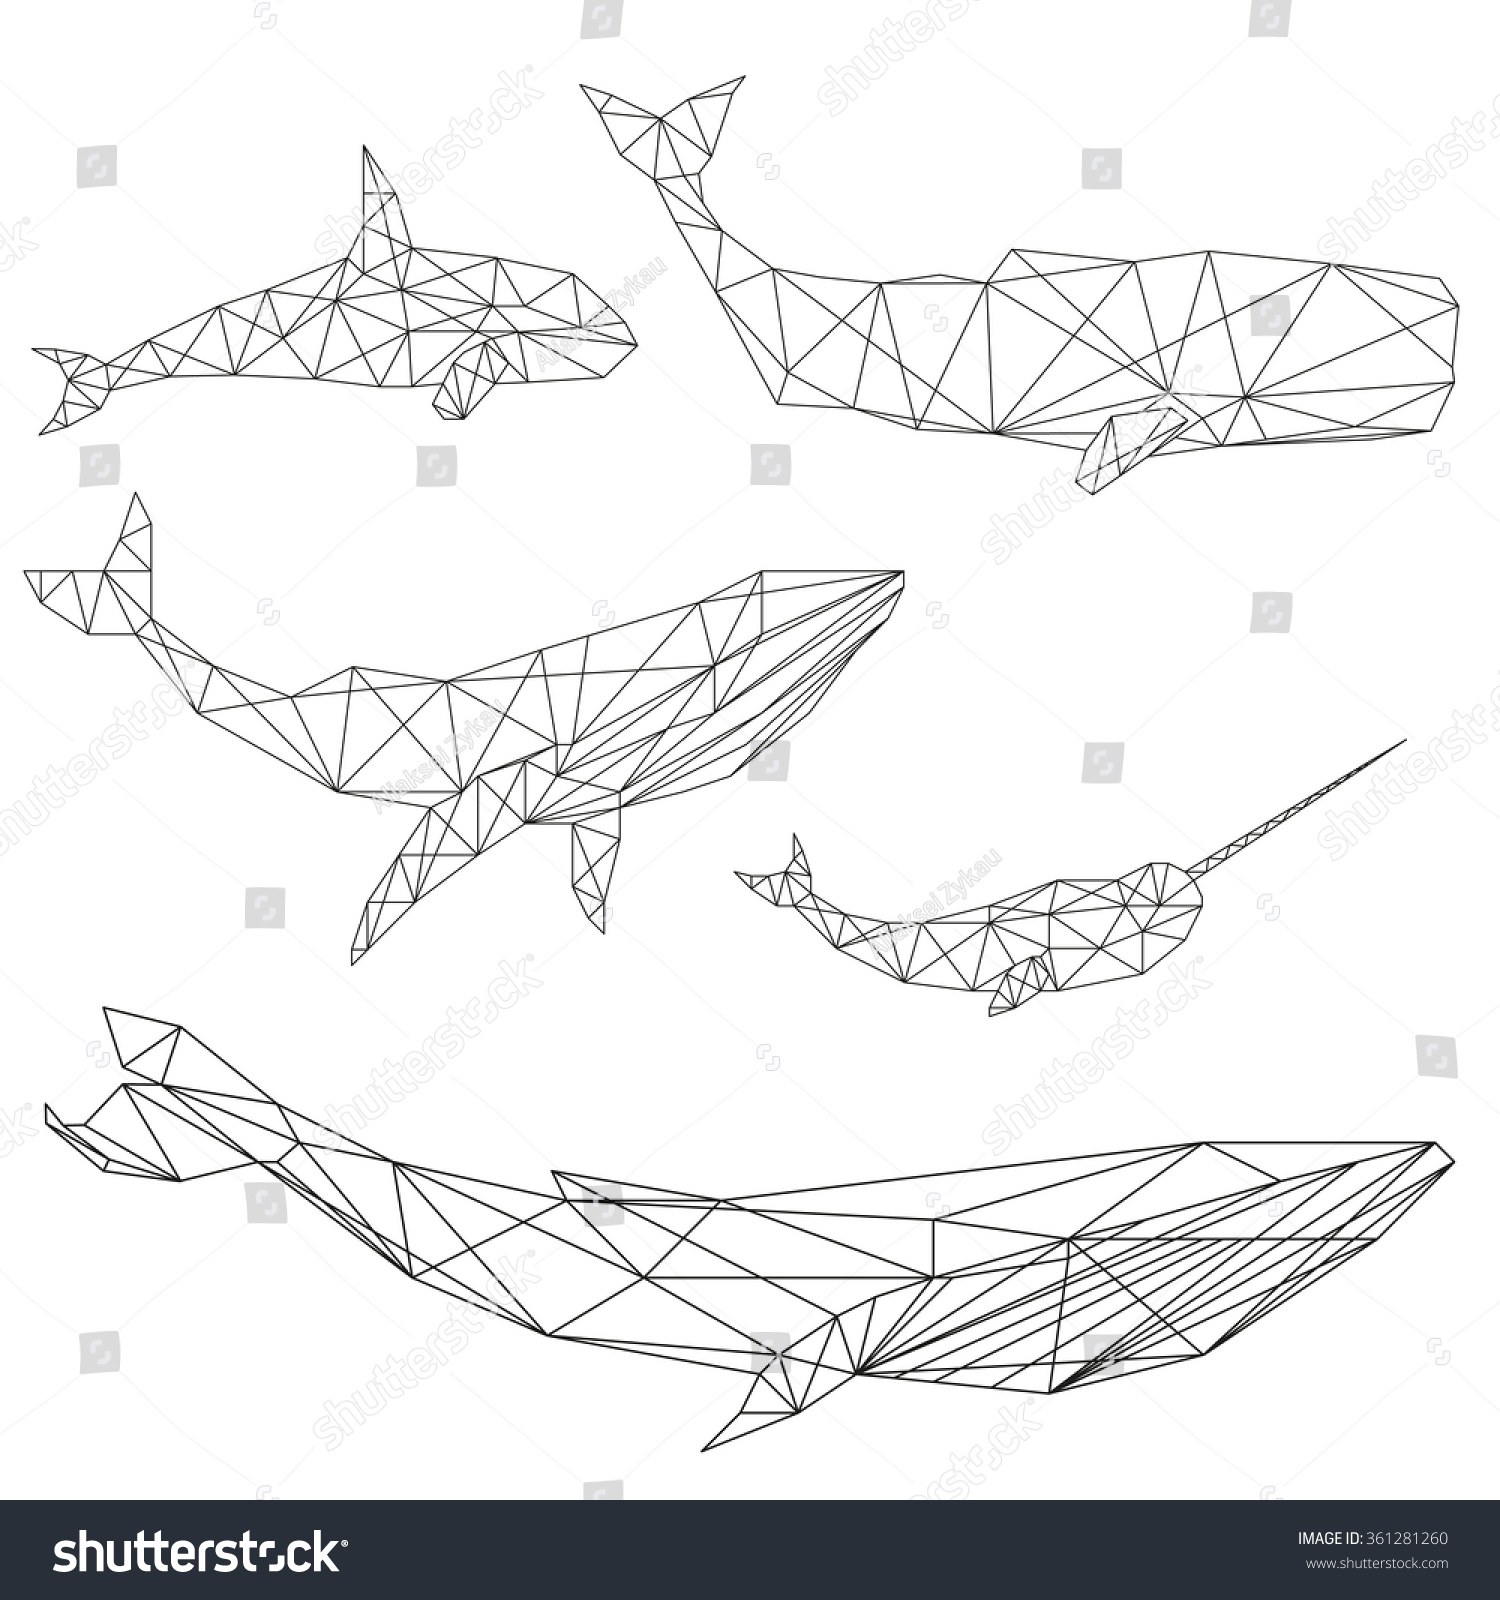 https://image.shutterstock.com/z/stock-photo-set-of-geometric-whales